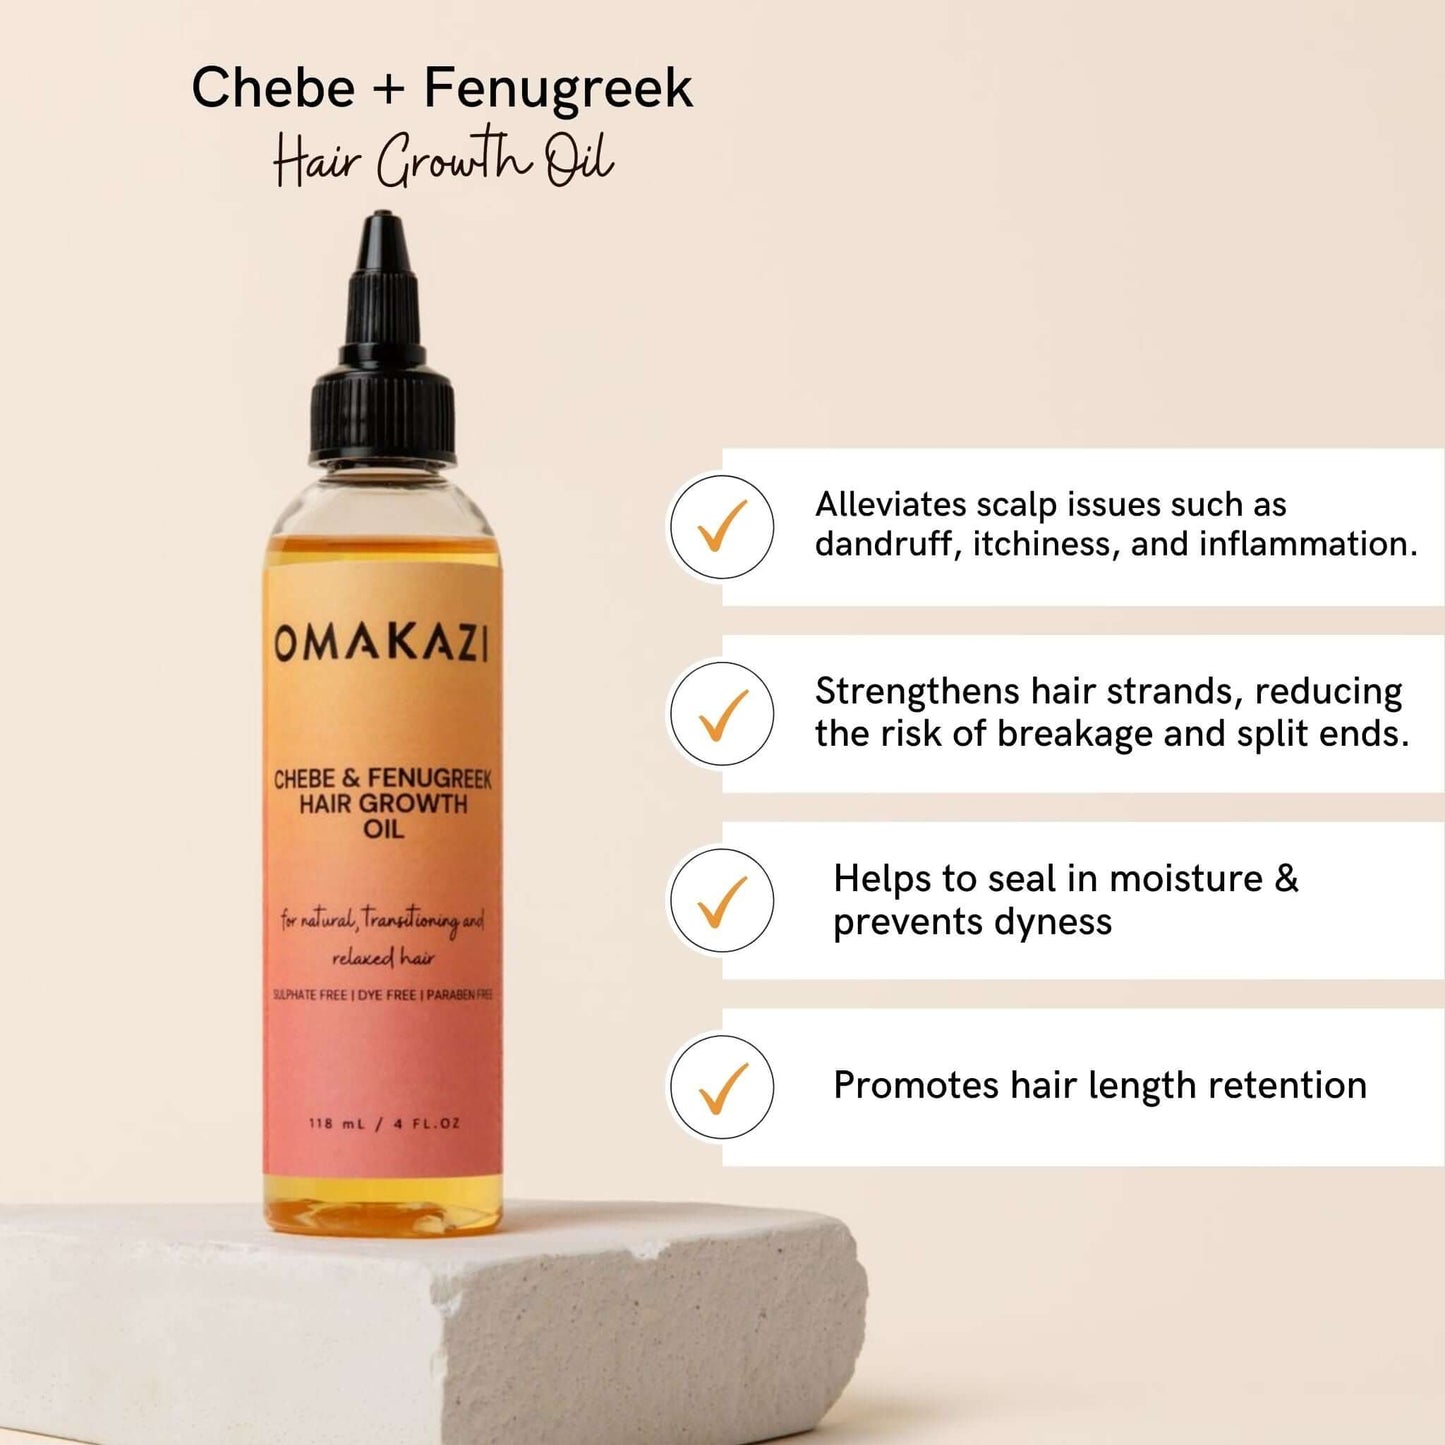 Chebe & Fenugreek Hair Growth Oil